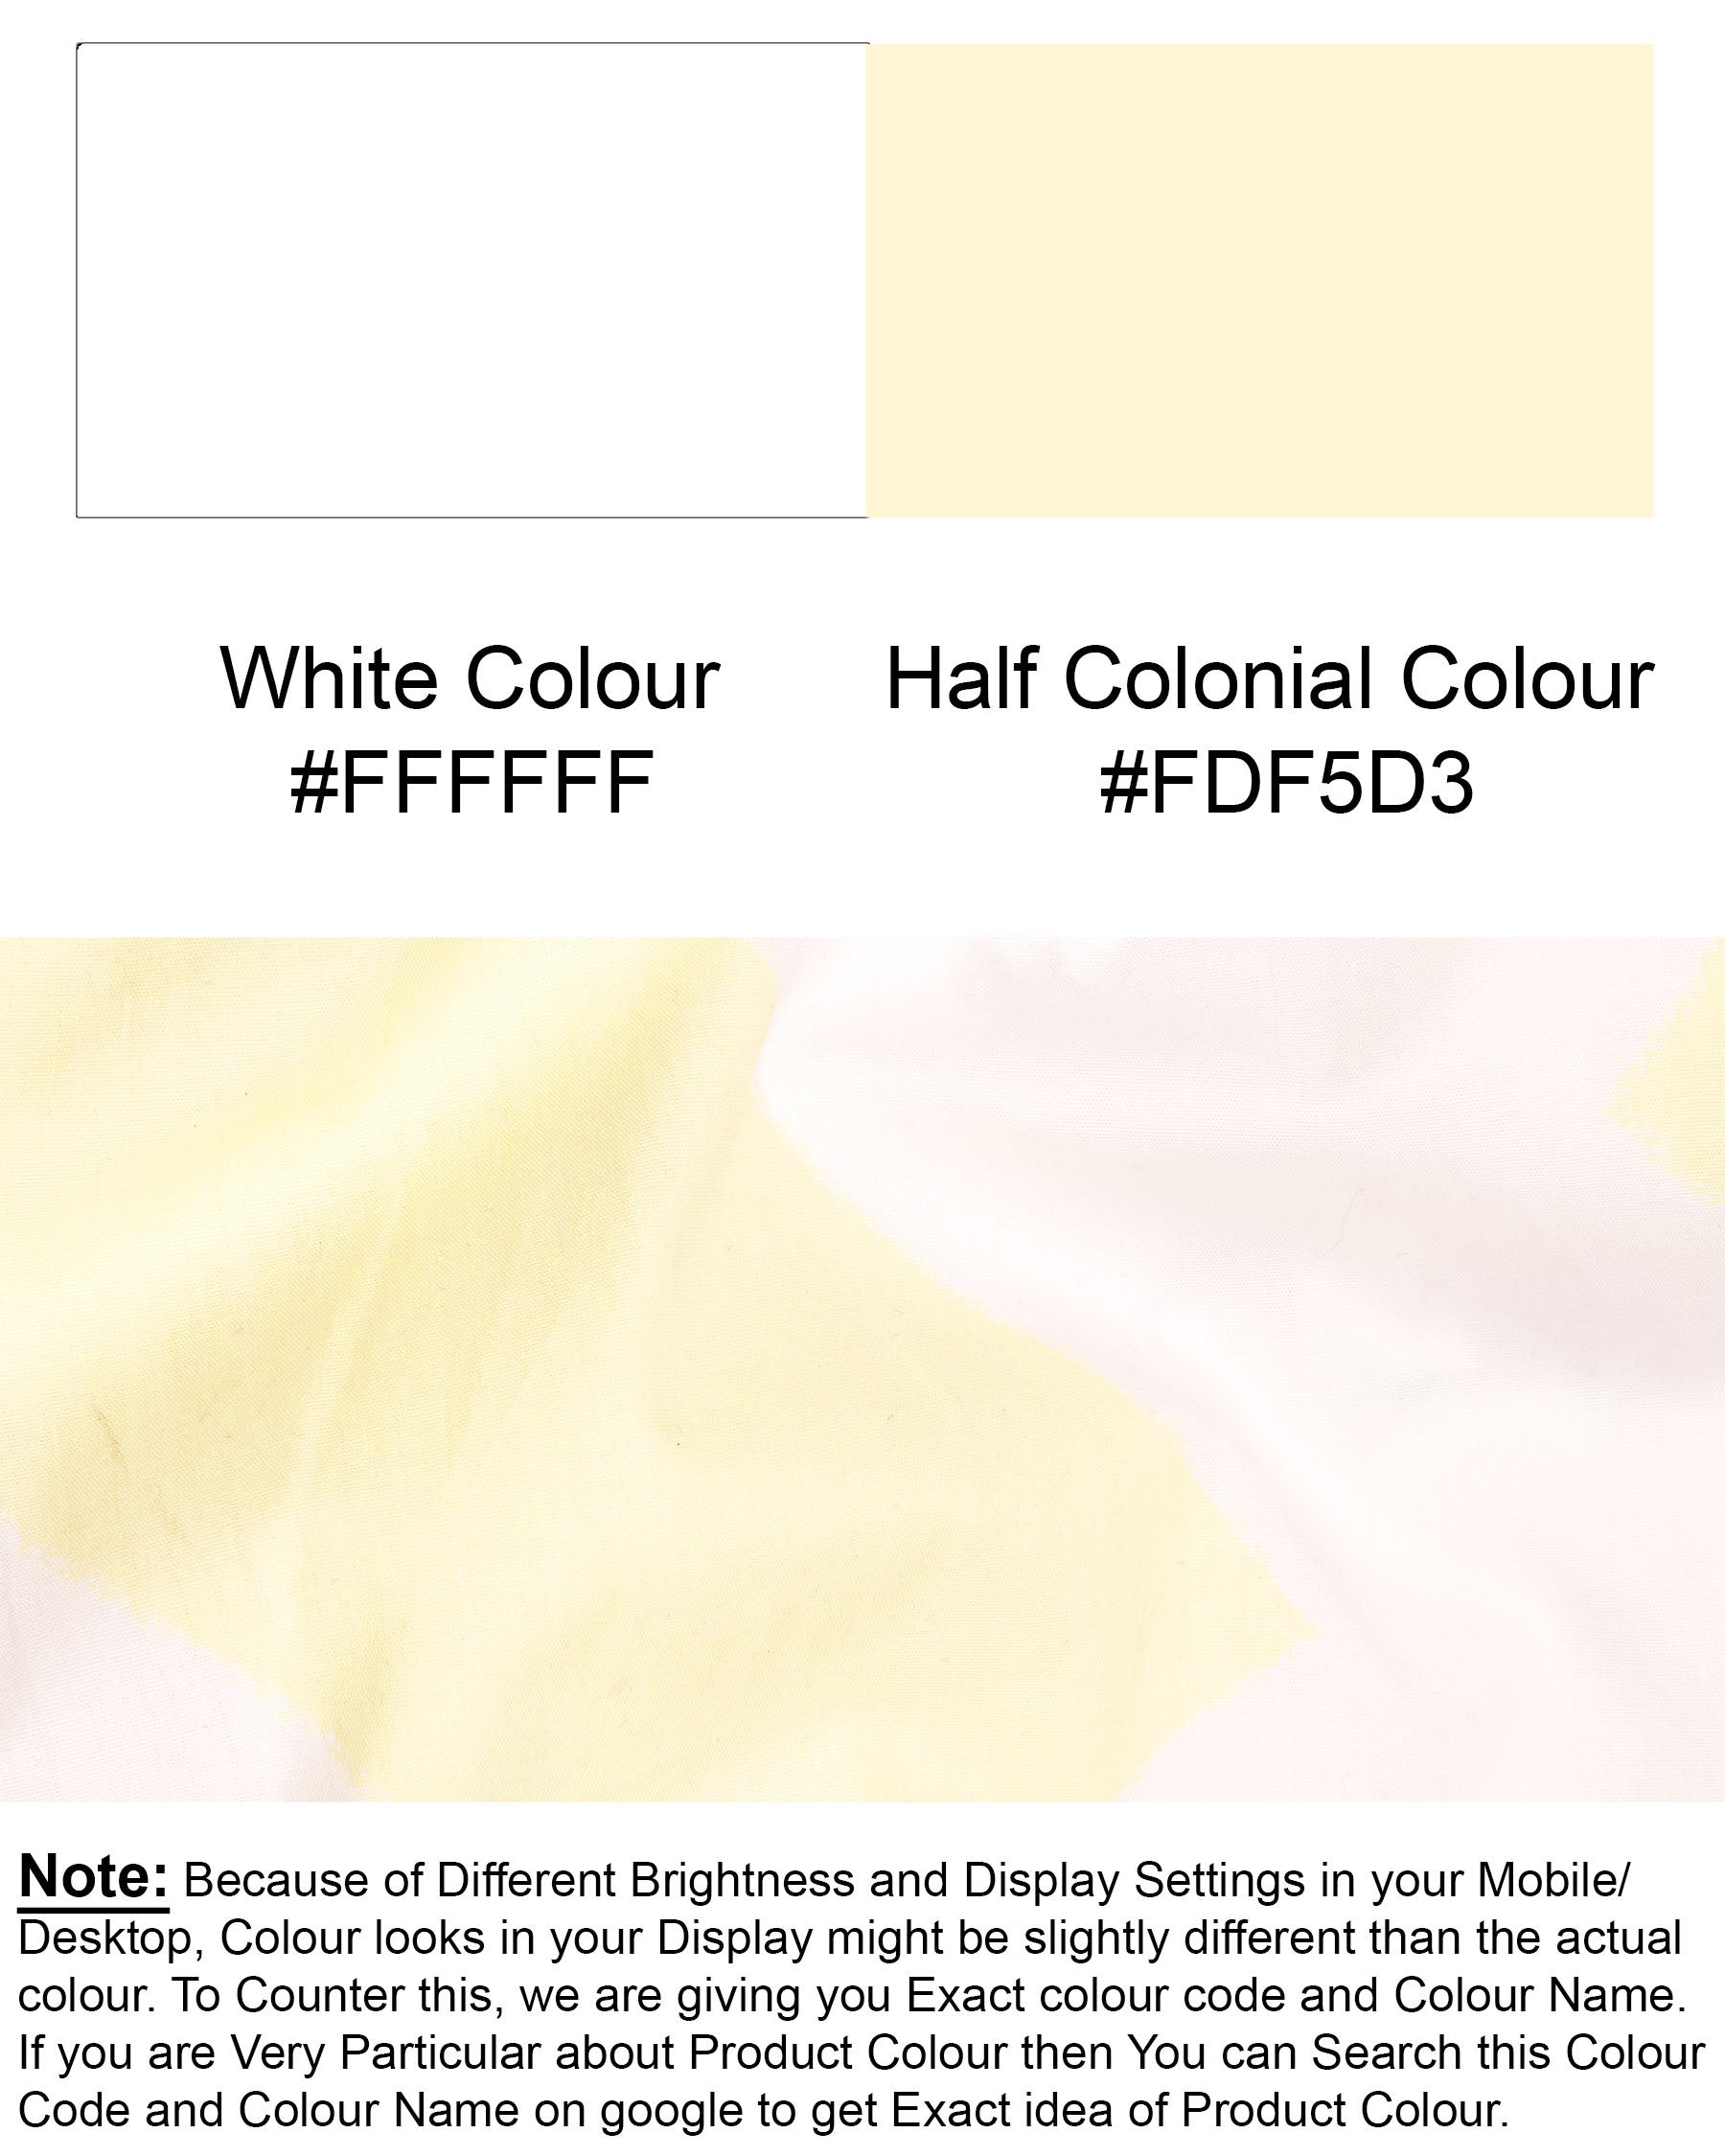 Colonial yellow and White abstract print Twill Premium Cotton Kurta Shirt 6919-KS-38,6919-KS-38,6919-KS-39,6919-KS-39,6919-KS-40,6919-KS-40,6919-KS-42,6919-KS-42,6919-KS-44,6919-KS-44,6919-KS-46,6919-KS-46,6919-KS-48,6919-KS-48,6919-KS-50,6919-KS-50,6919-KS-52,6919-KS-52